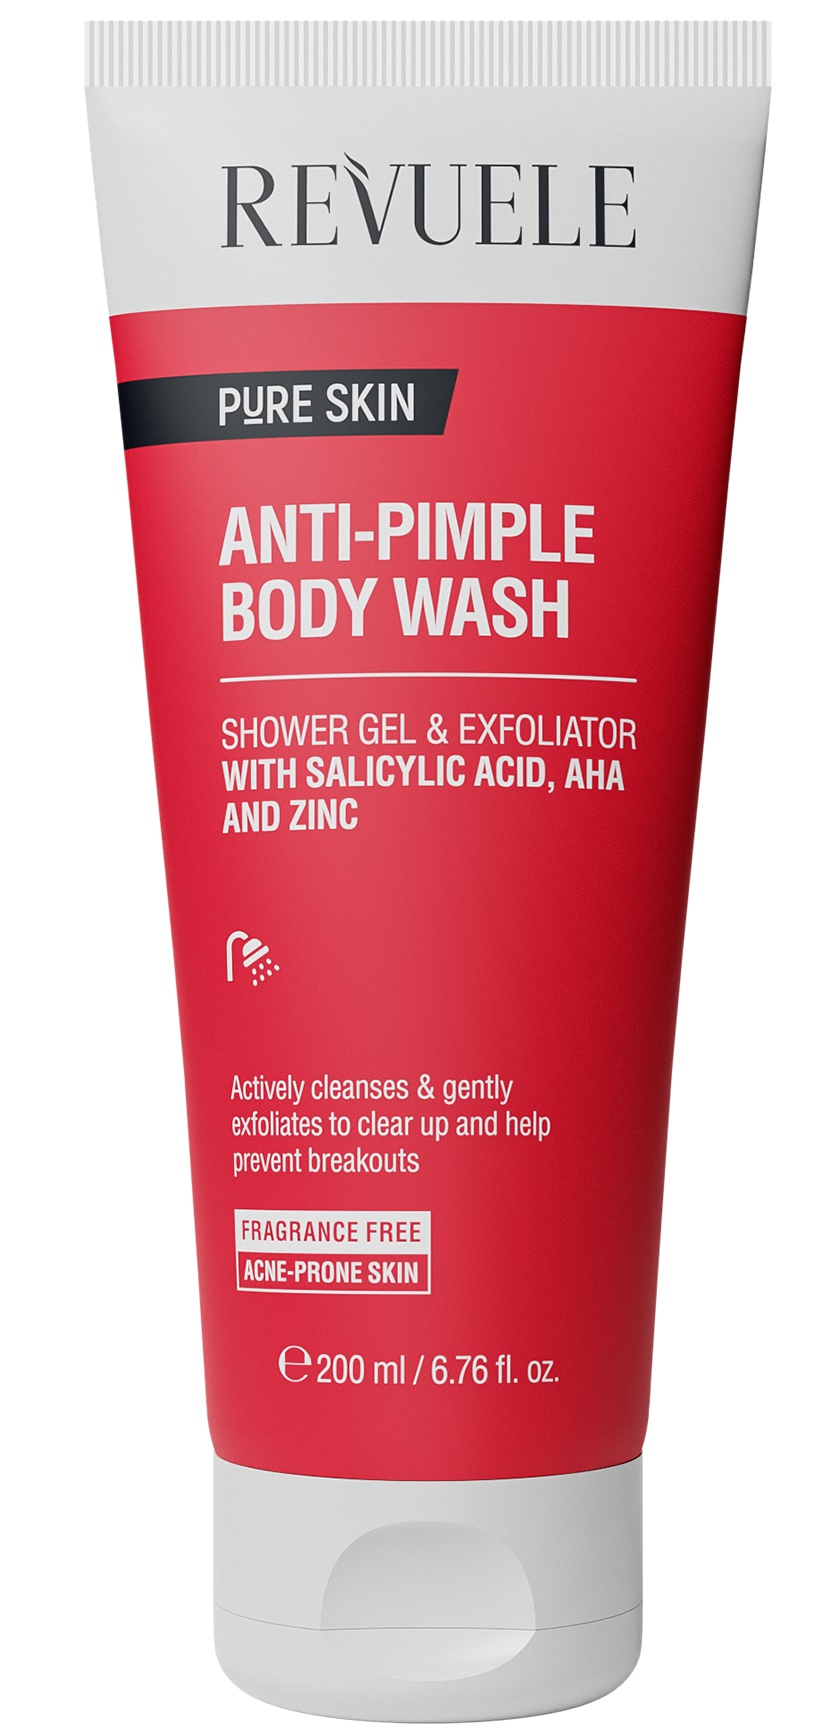 Revuele Pure Skin Anti-Pimple Body Wash